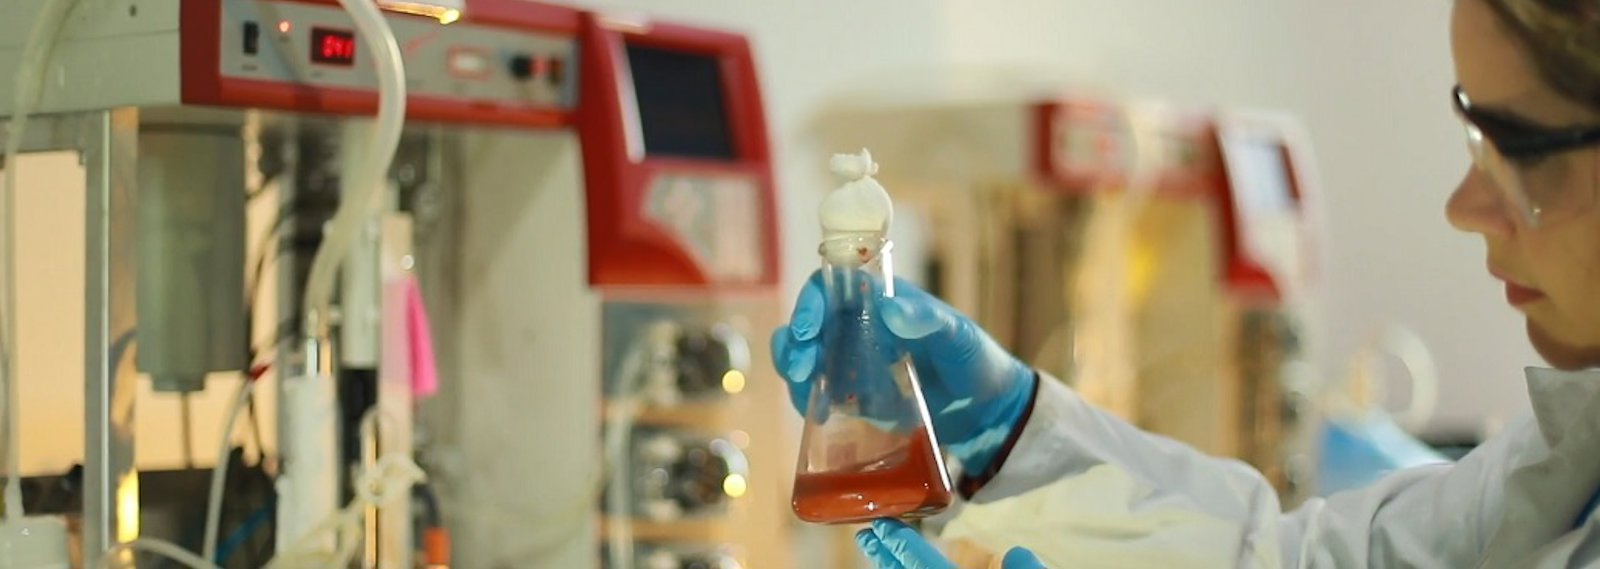 Química observando tubo de ensaio no laboratório.